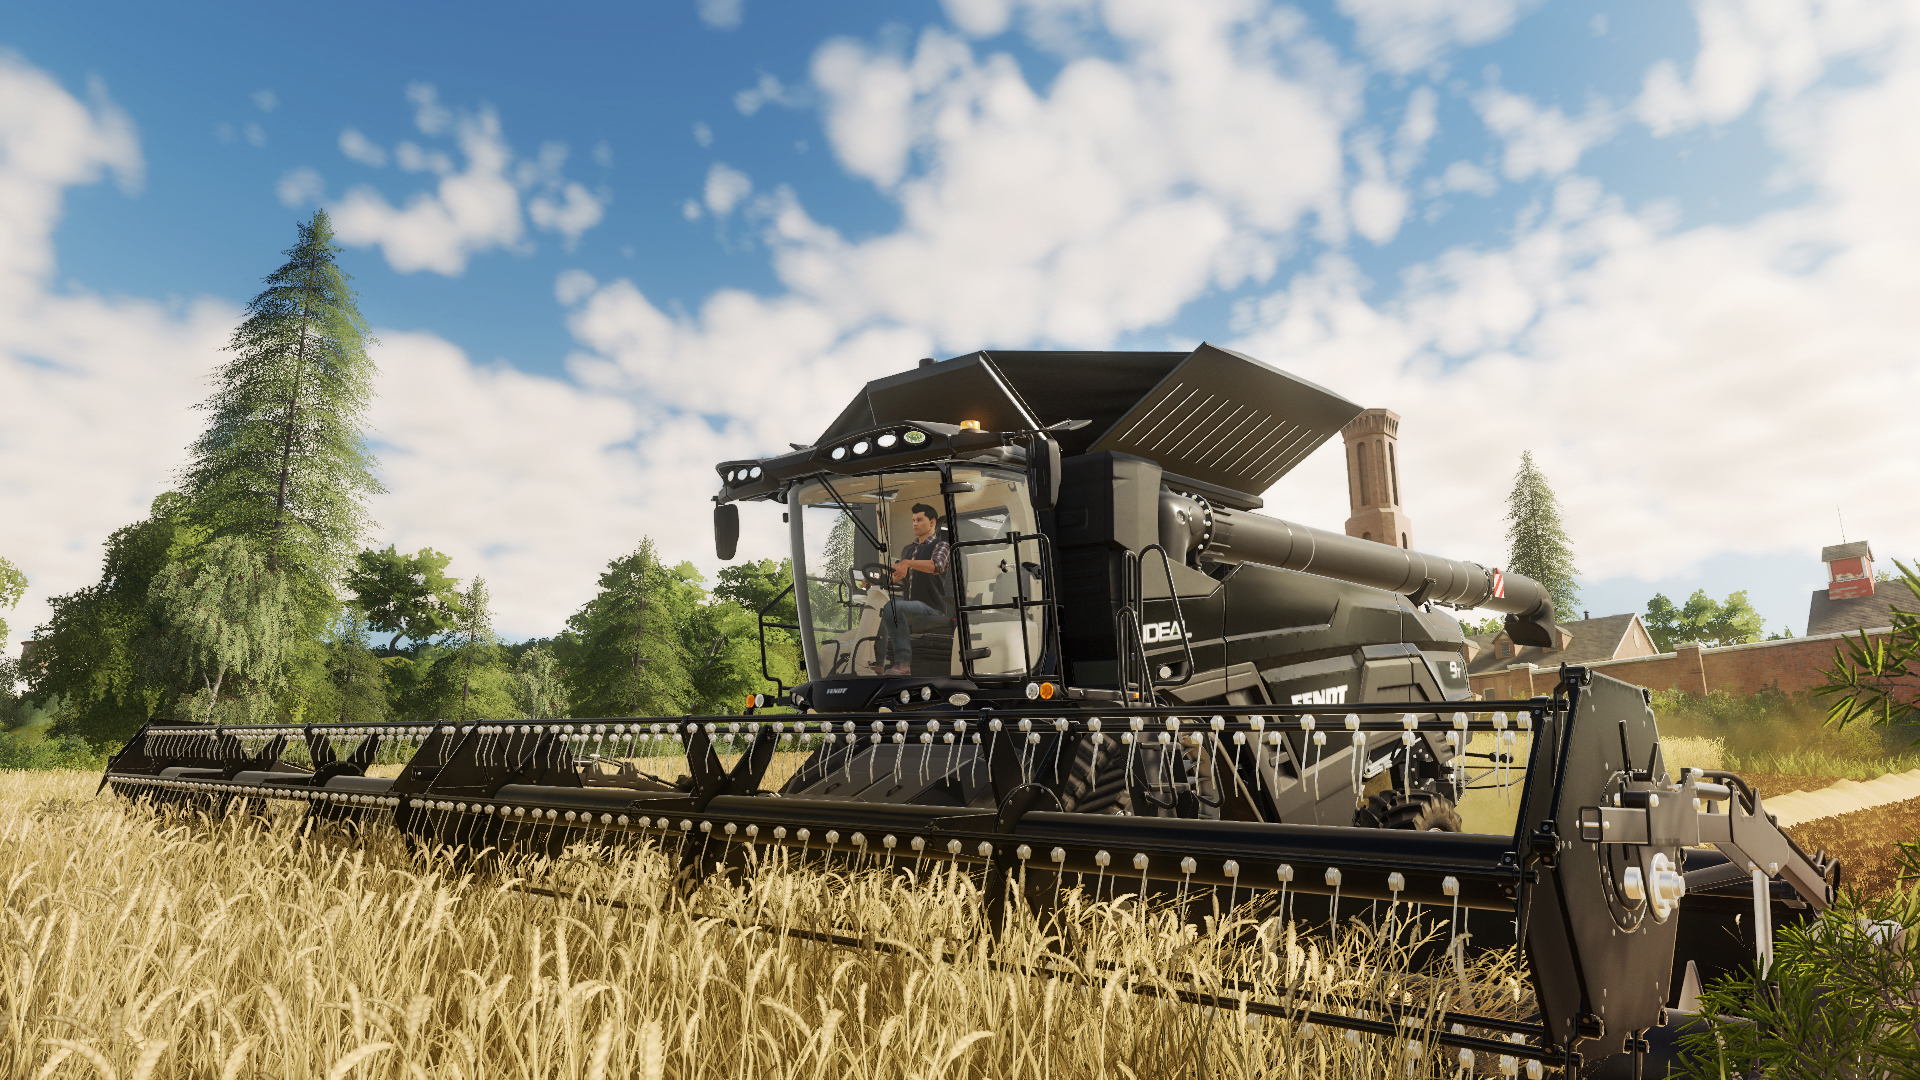 Farming Simulator 19 screenshot